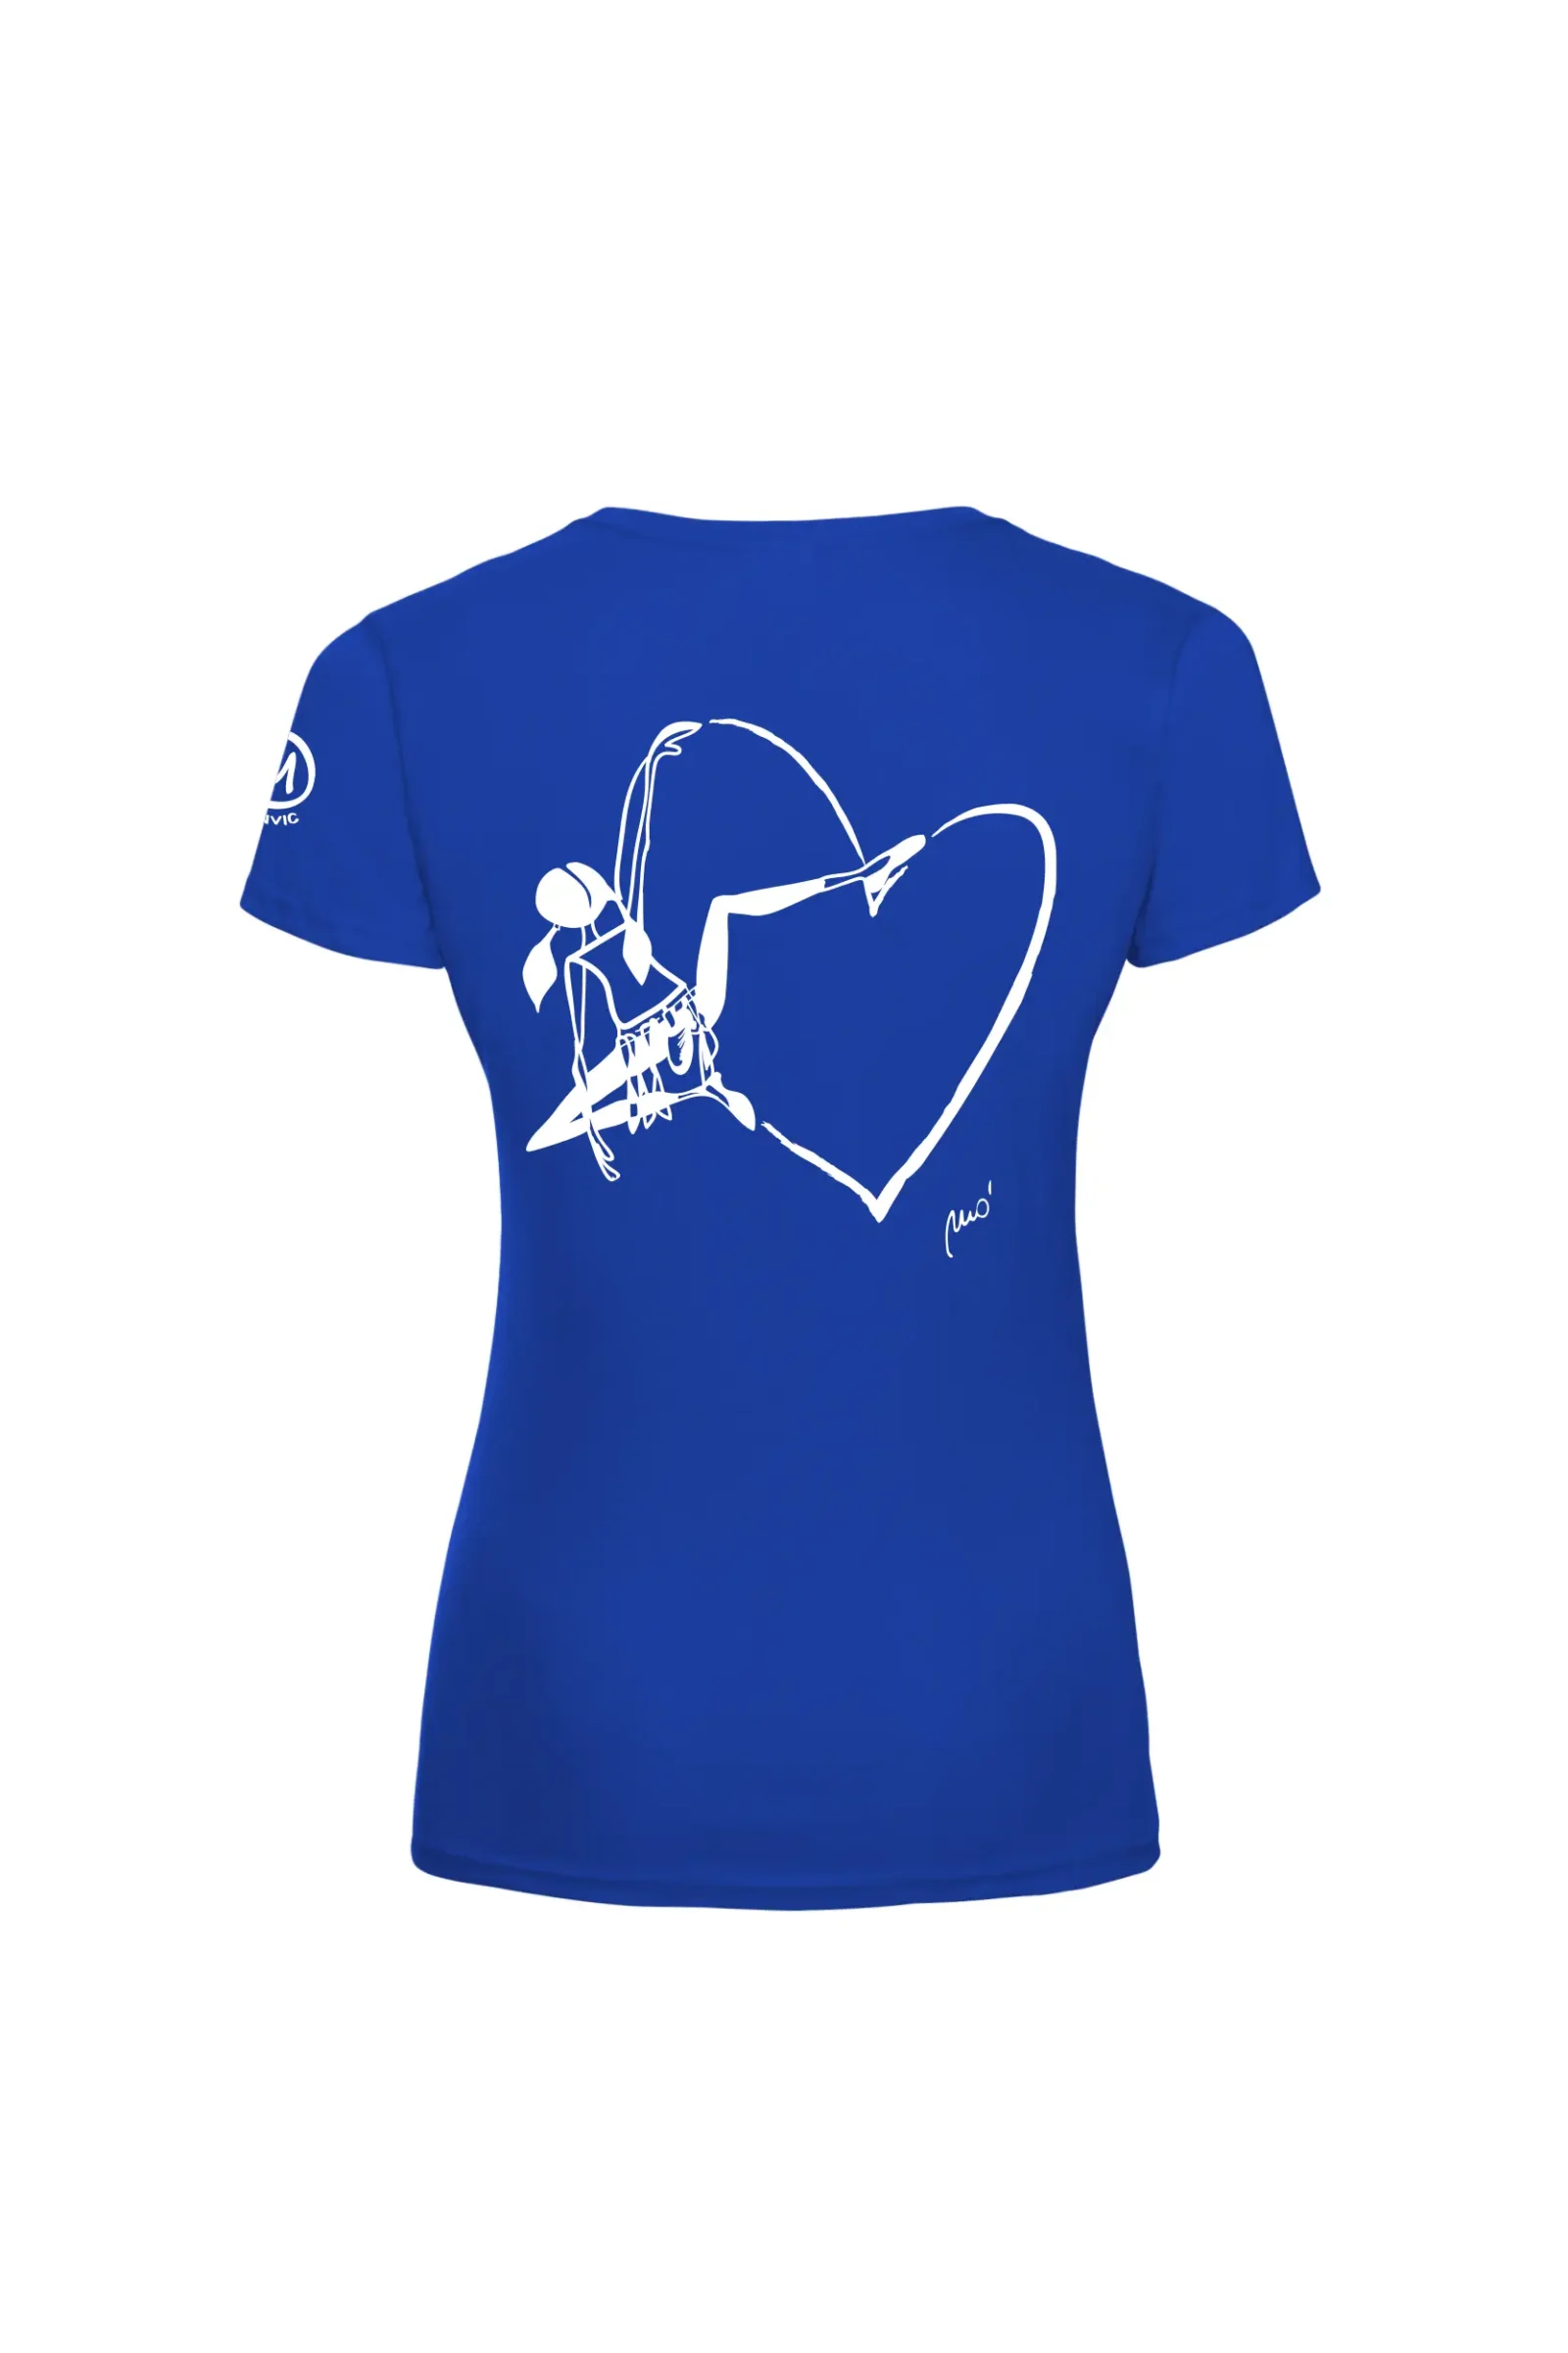 T-shirt escalade femme - coton bleu roi - graphisme "Out" - SHARON by MONVIC